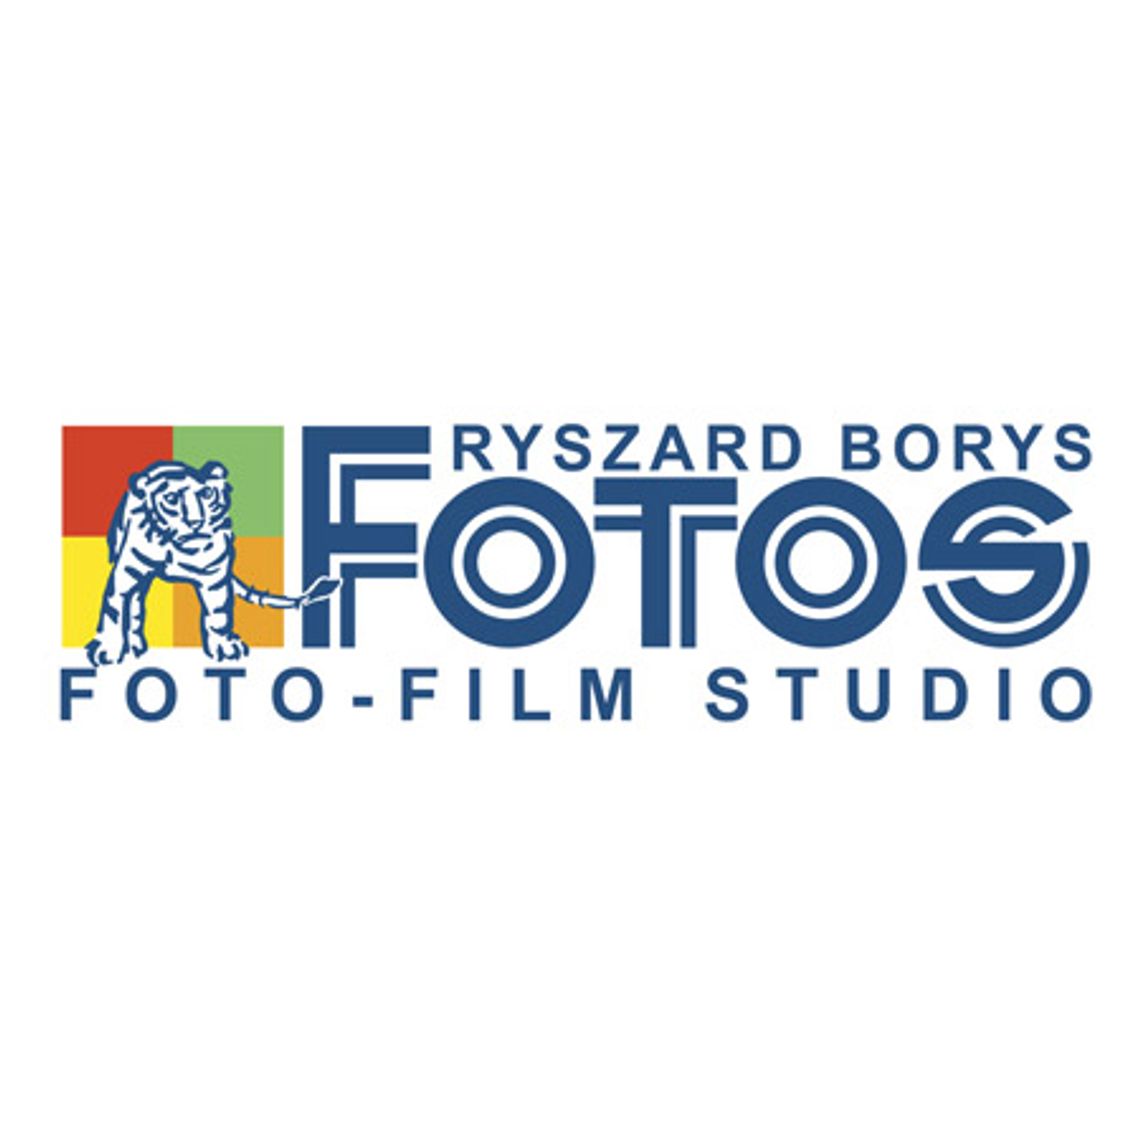 Fotograf i Kamerzysta - Studio Fotos Ryszard Borys